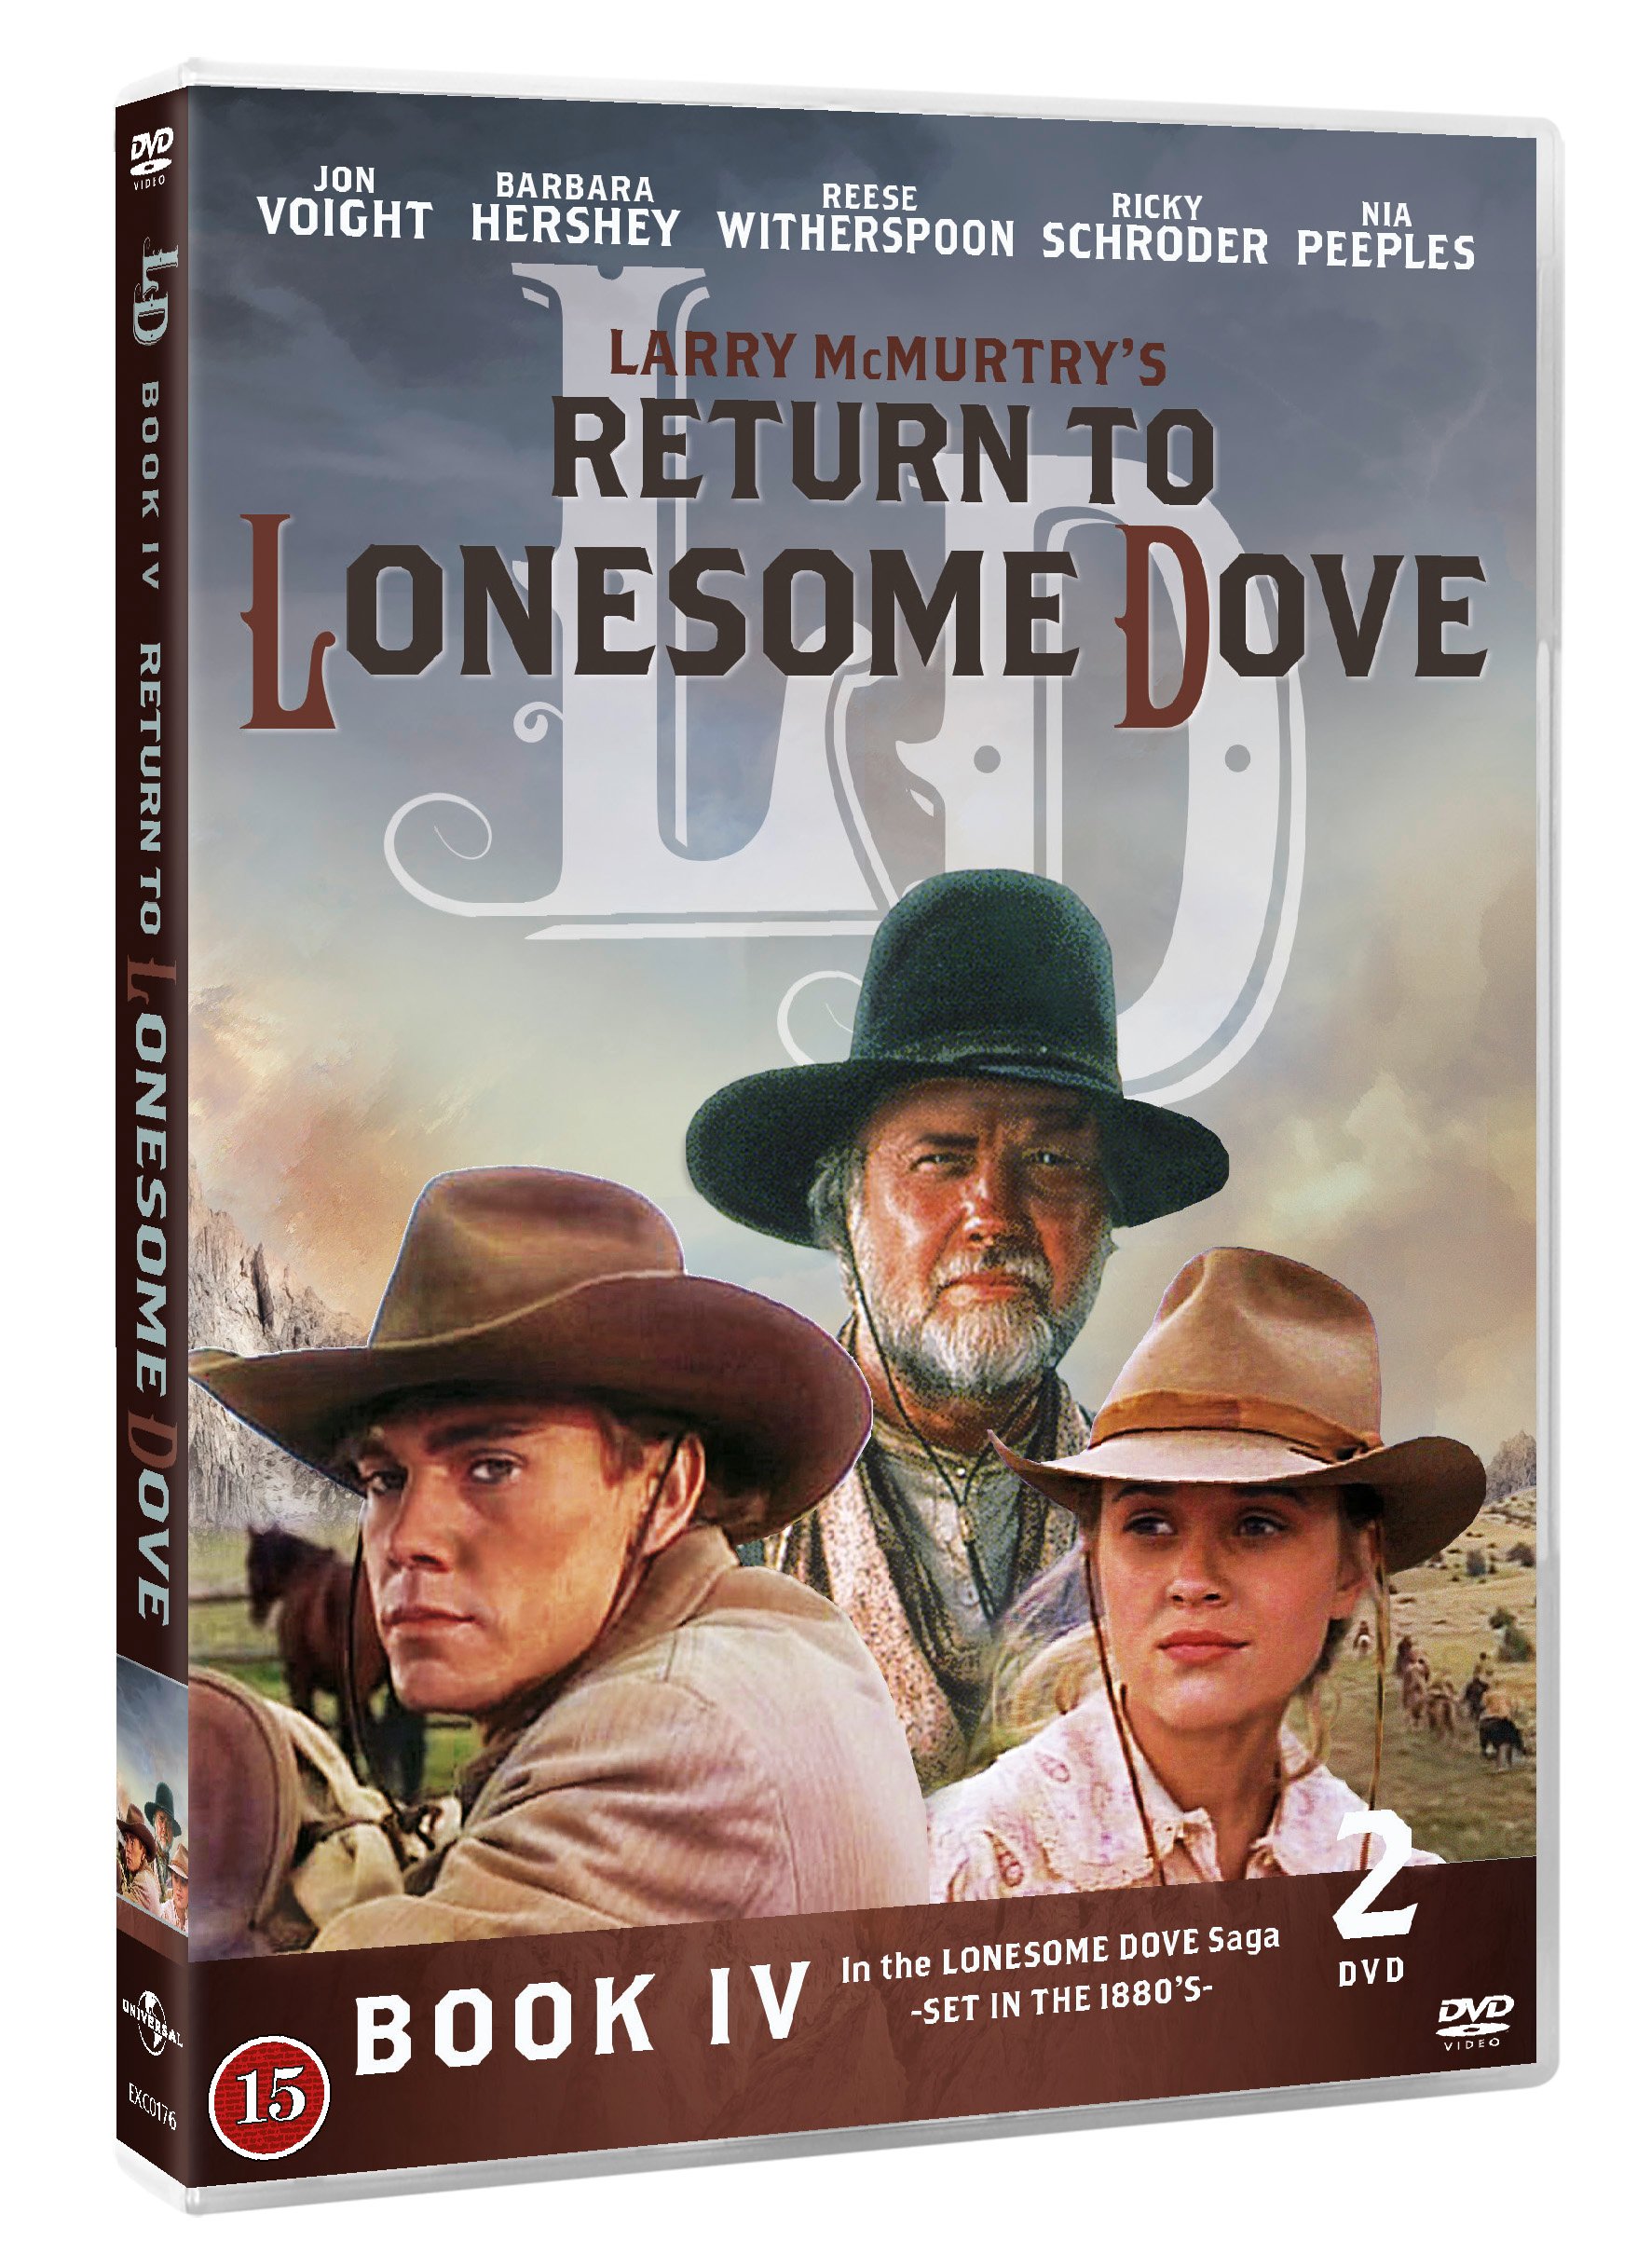 Return to Lonesome Dove (Mini series– 2 DVD box - book IV)